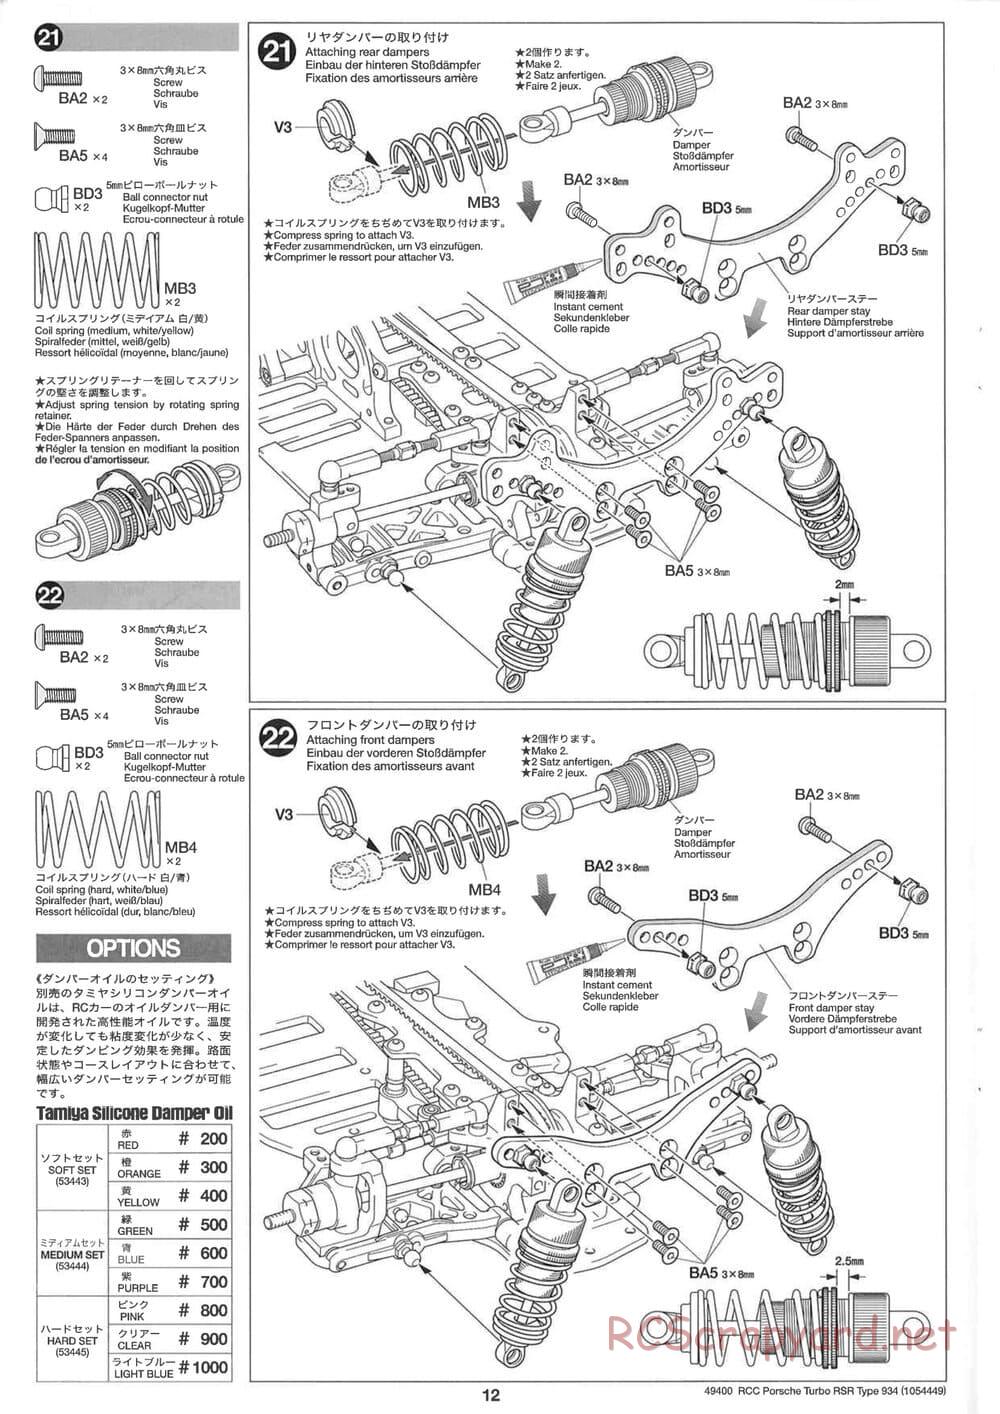 Tamiya - Porsche Turbo RSR Type 934 - TA05 Chassis - Manual - Page 12